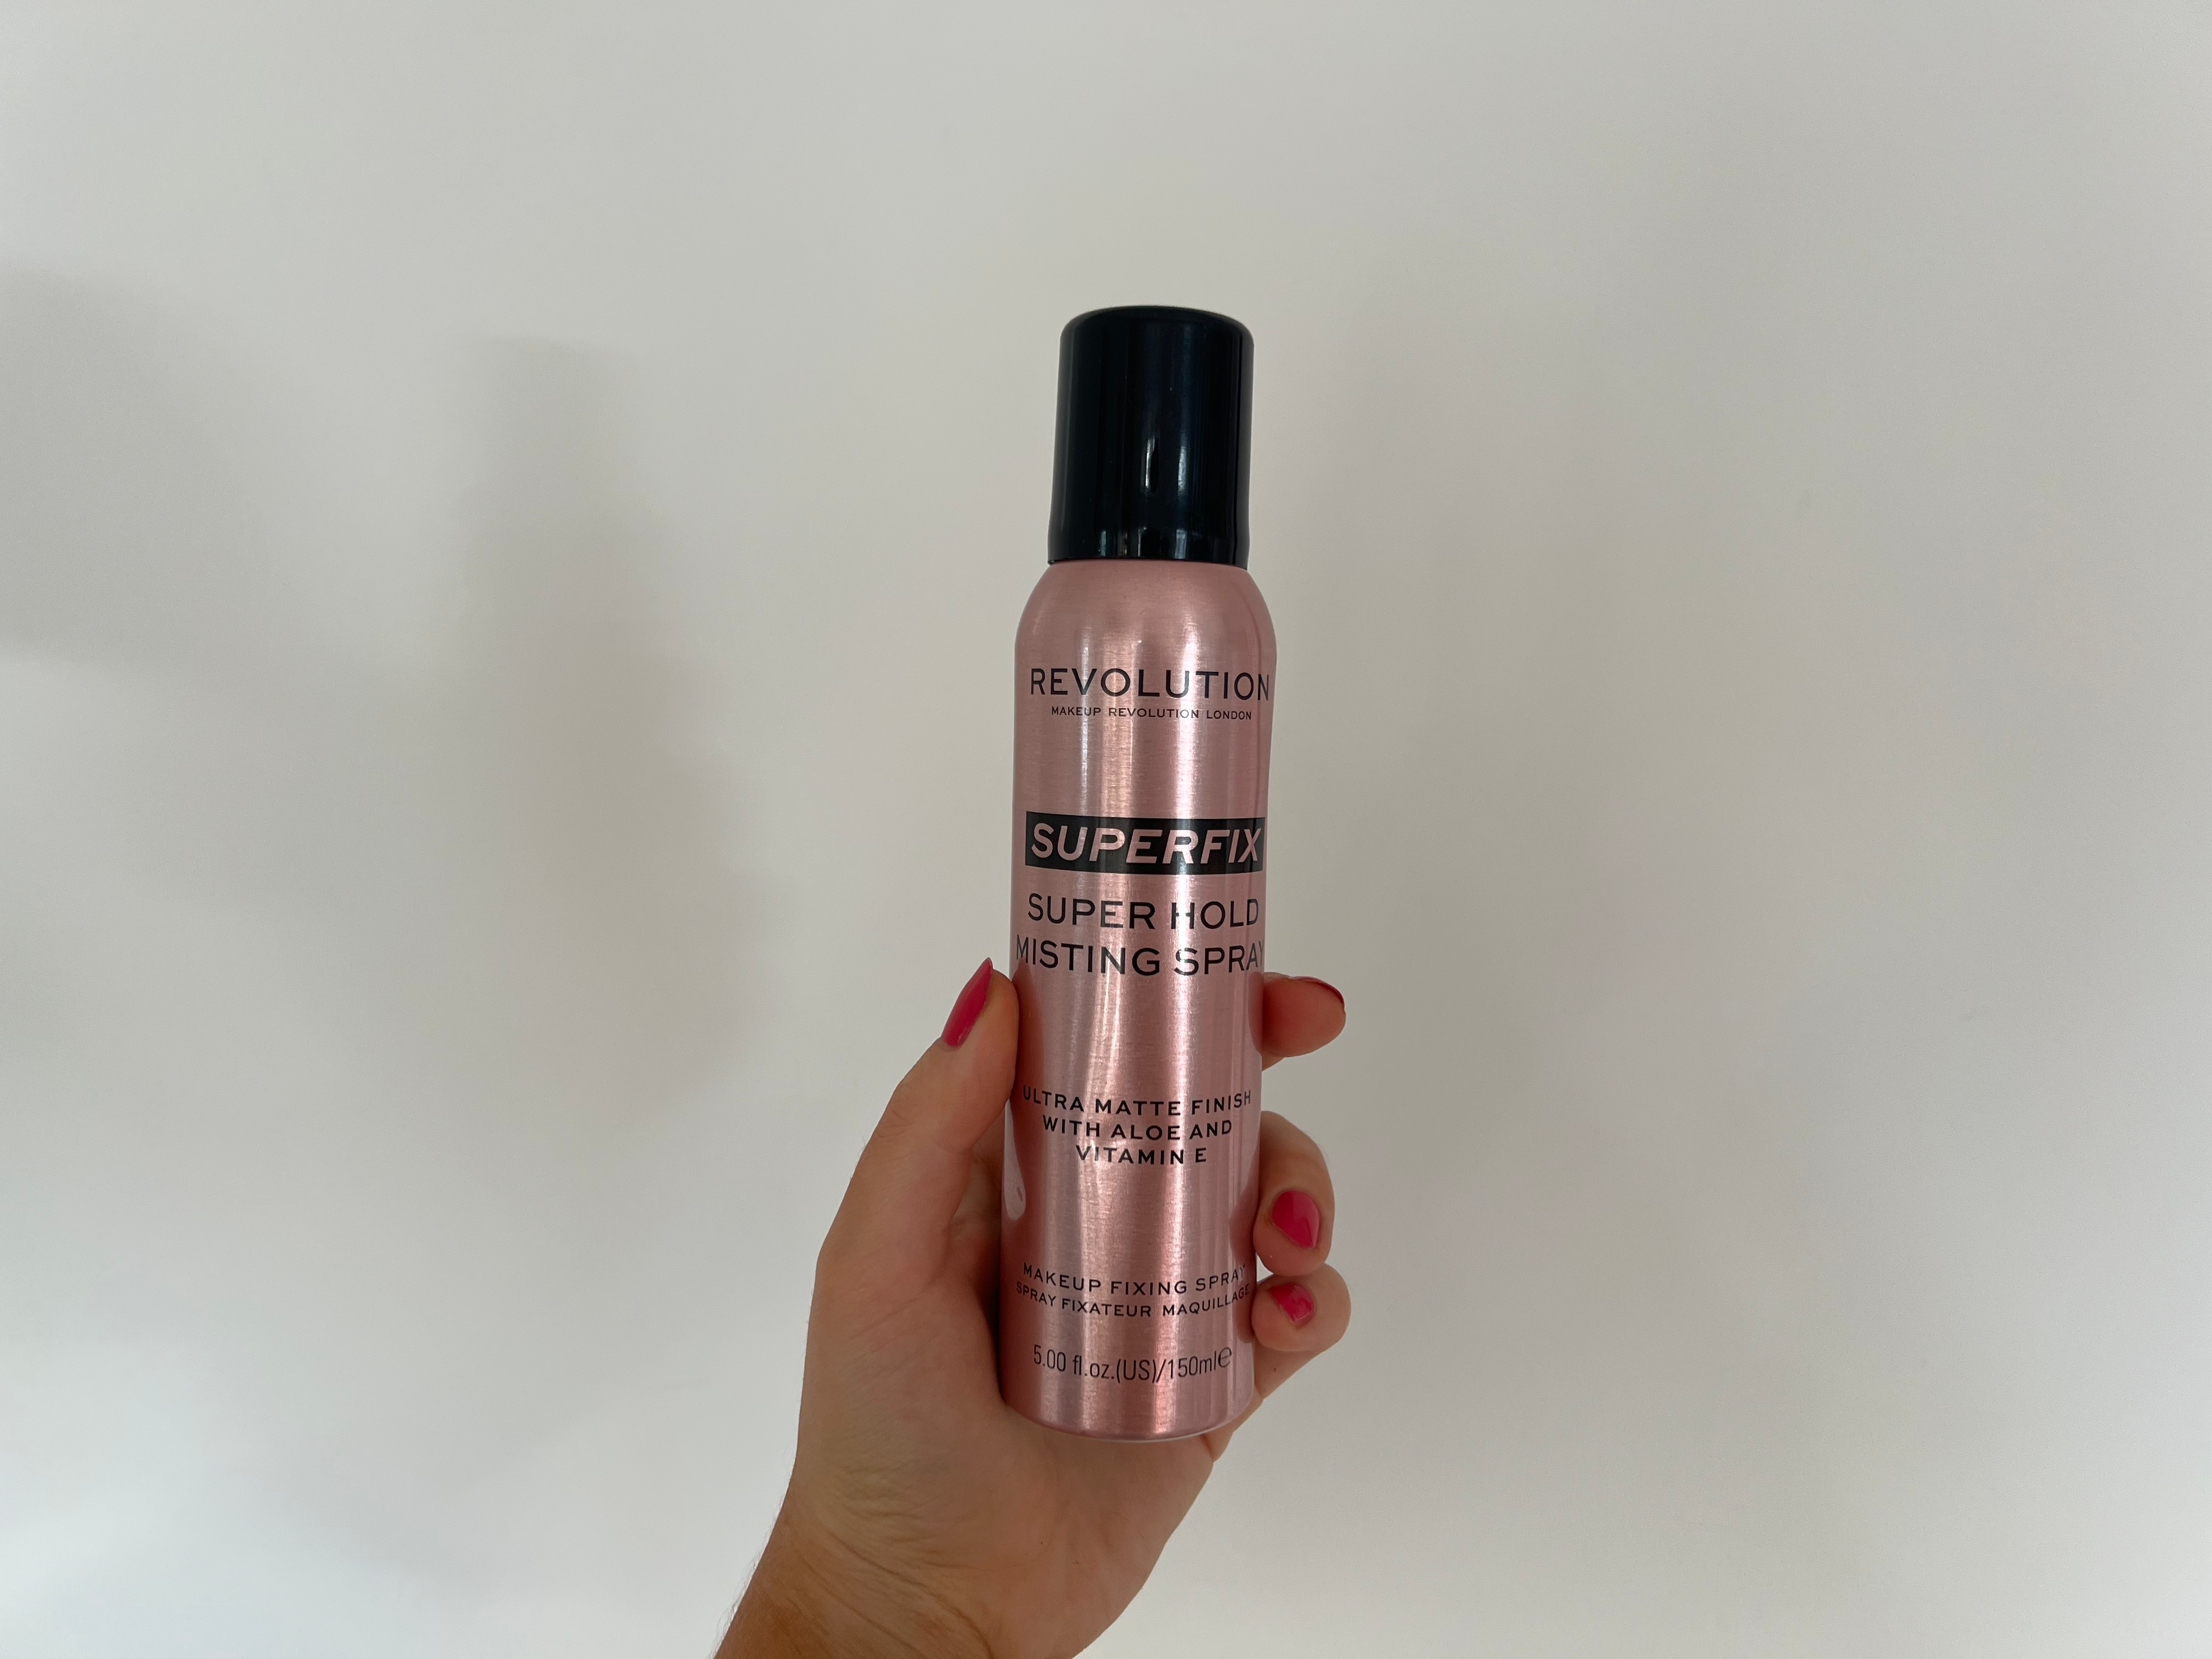 Makeup Revolution superfix misting setting spray review